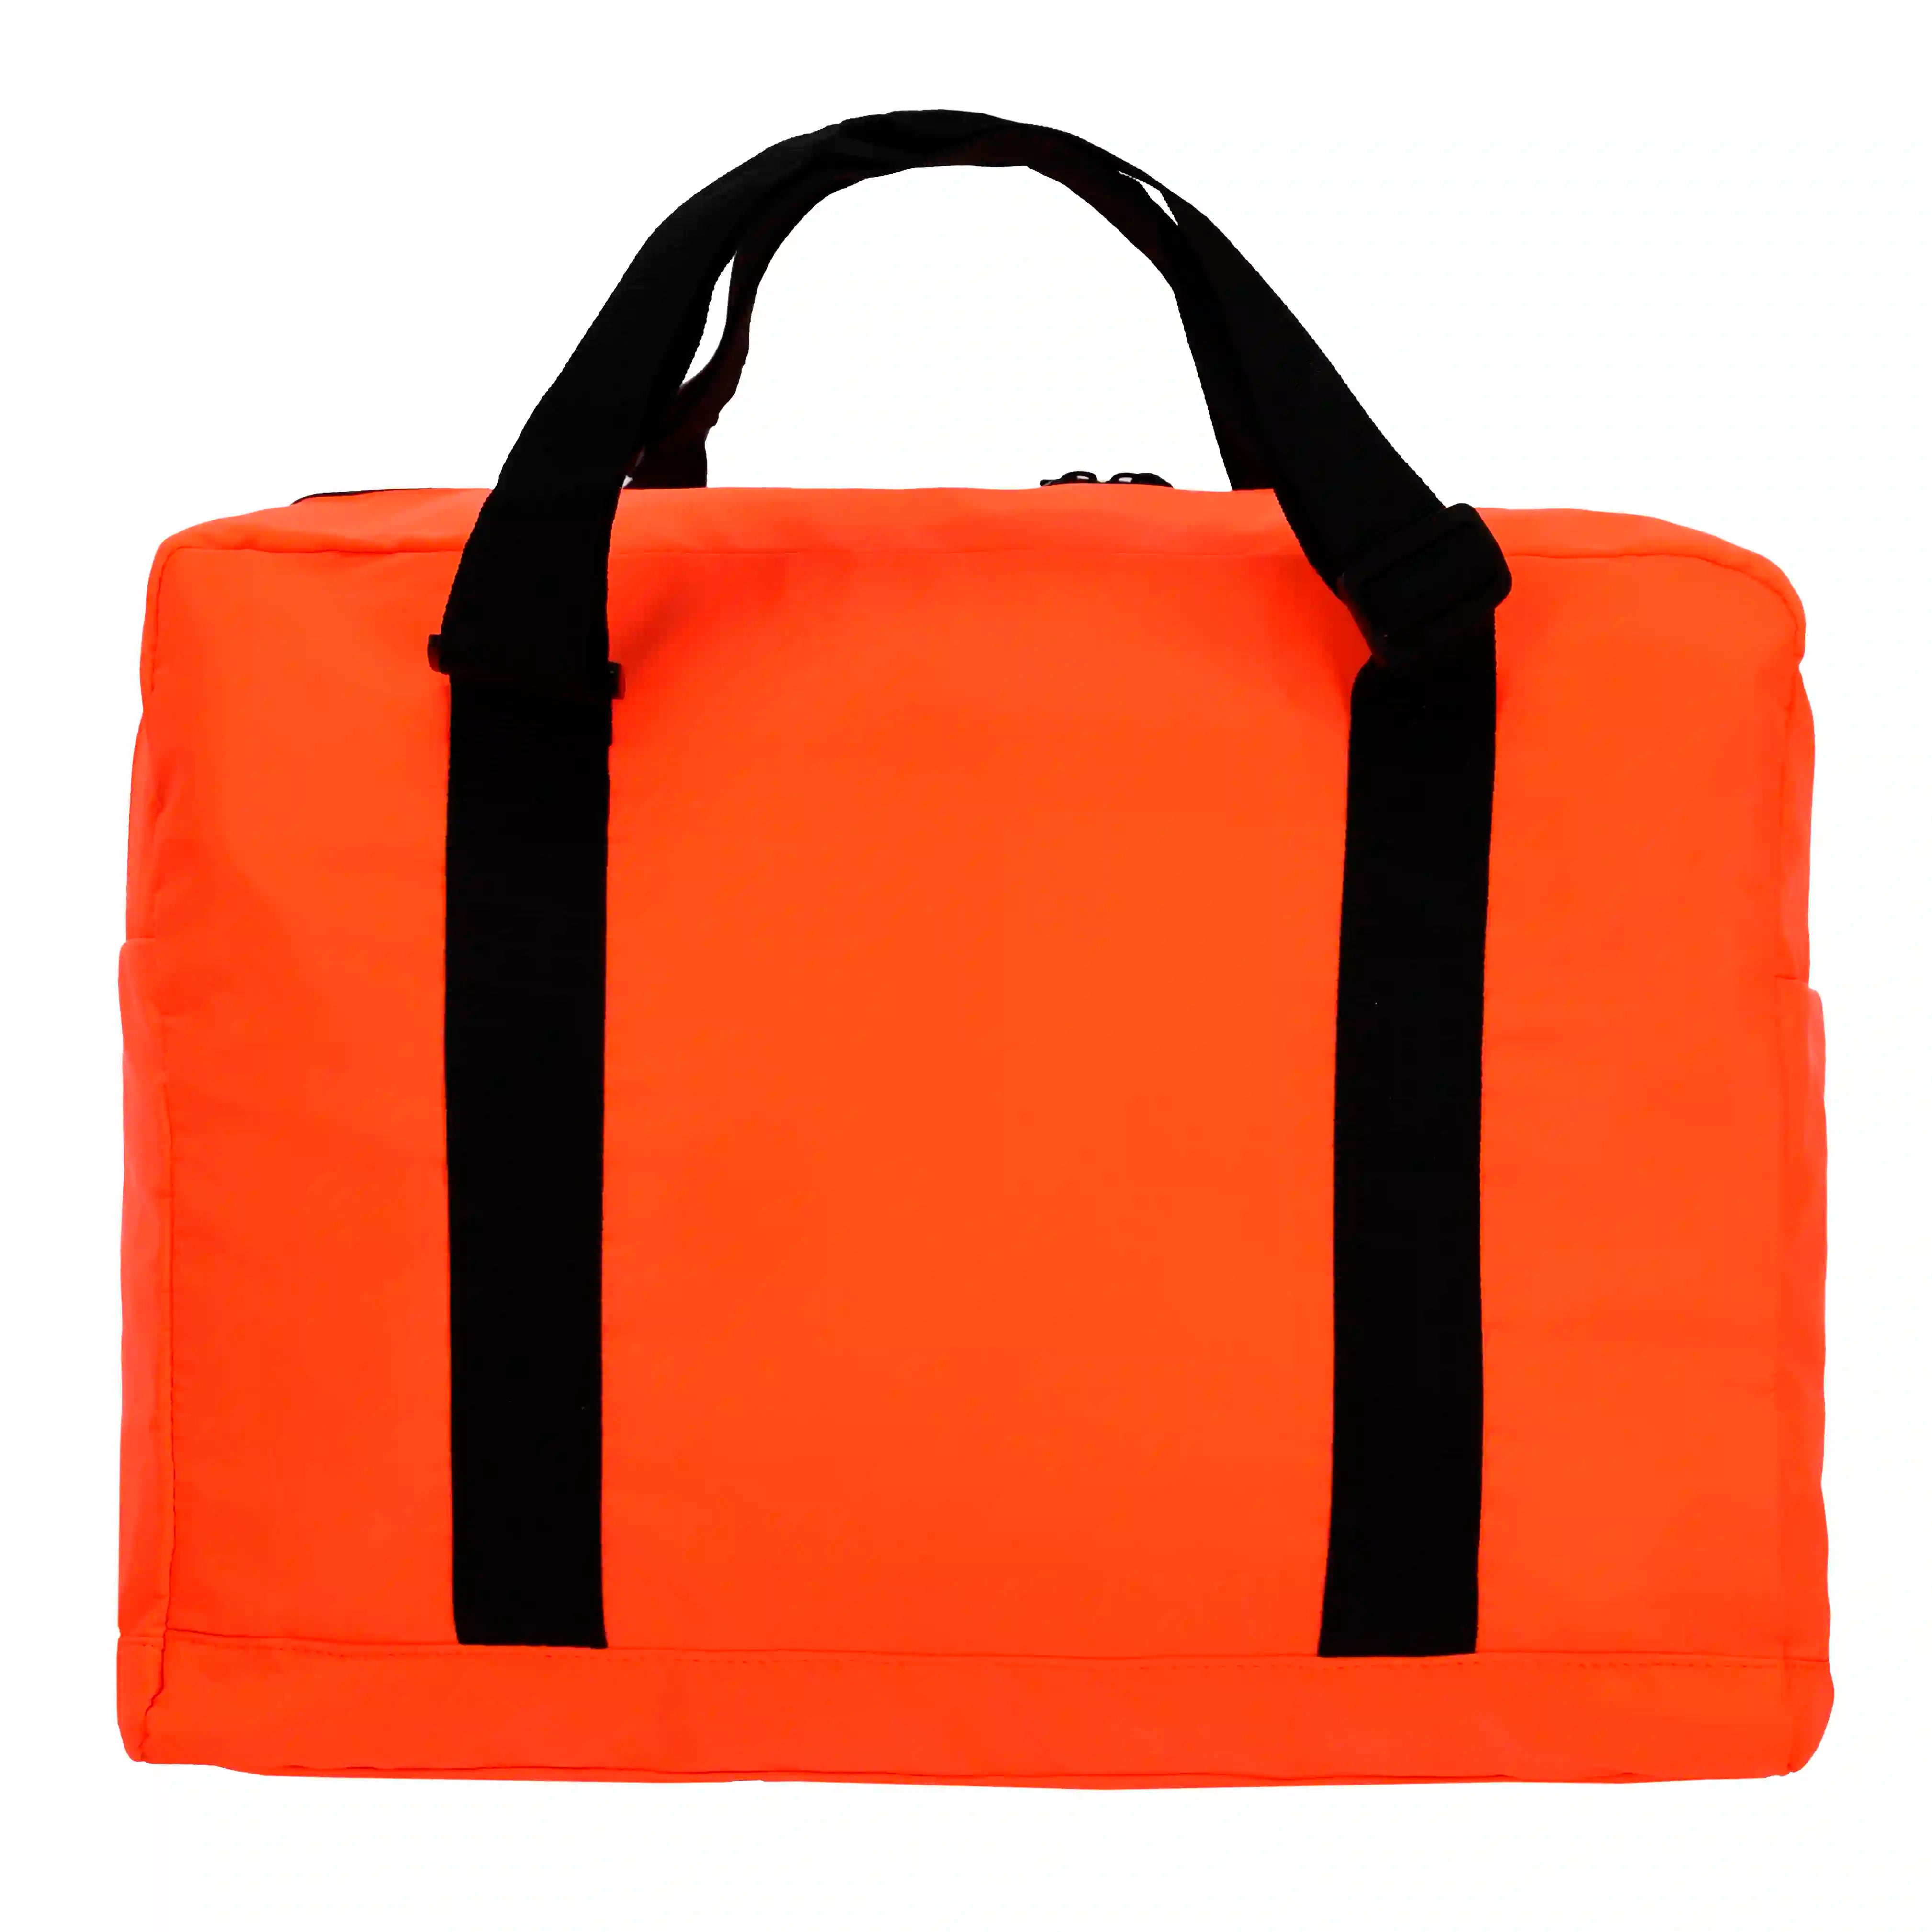 Travelite Accessories Folding Travel Bag 44 cm - Limone